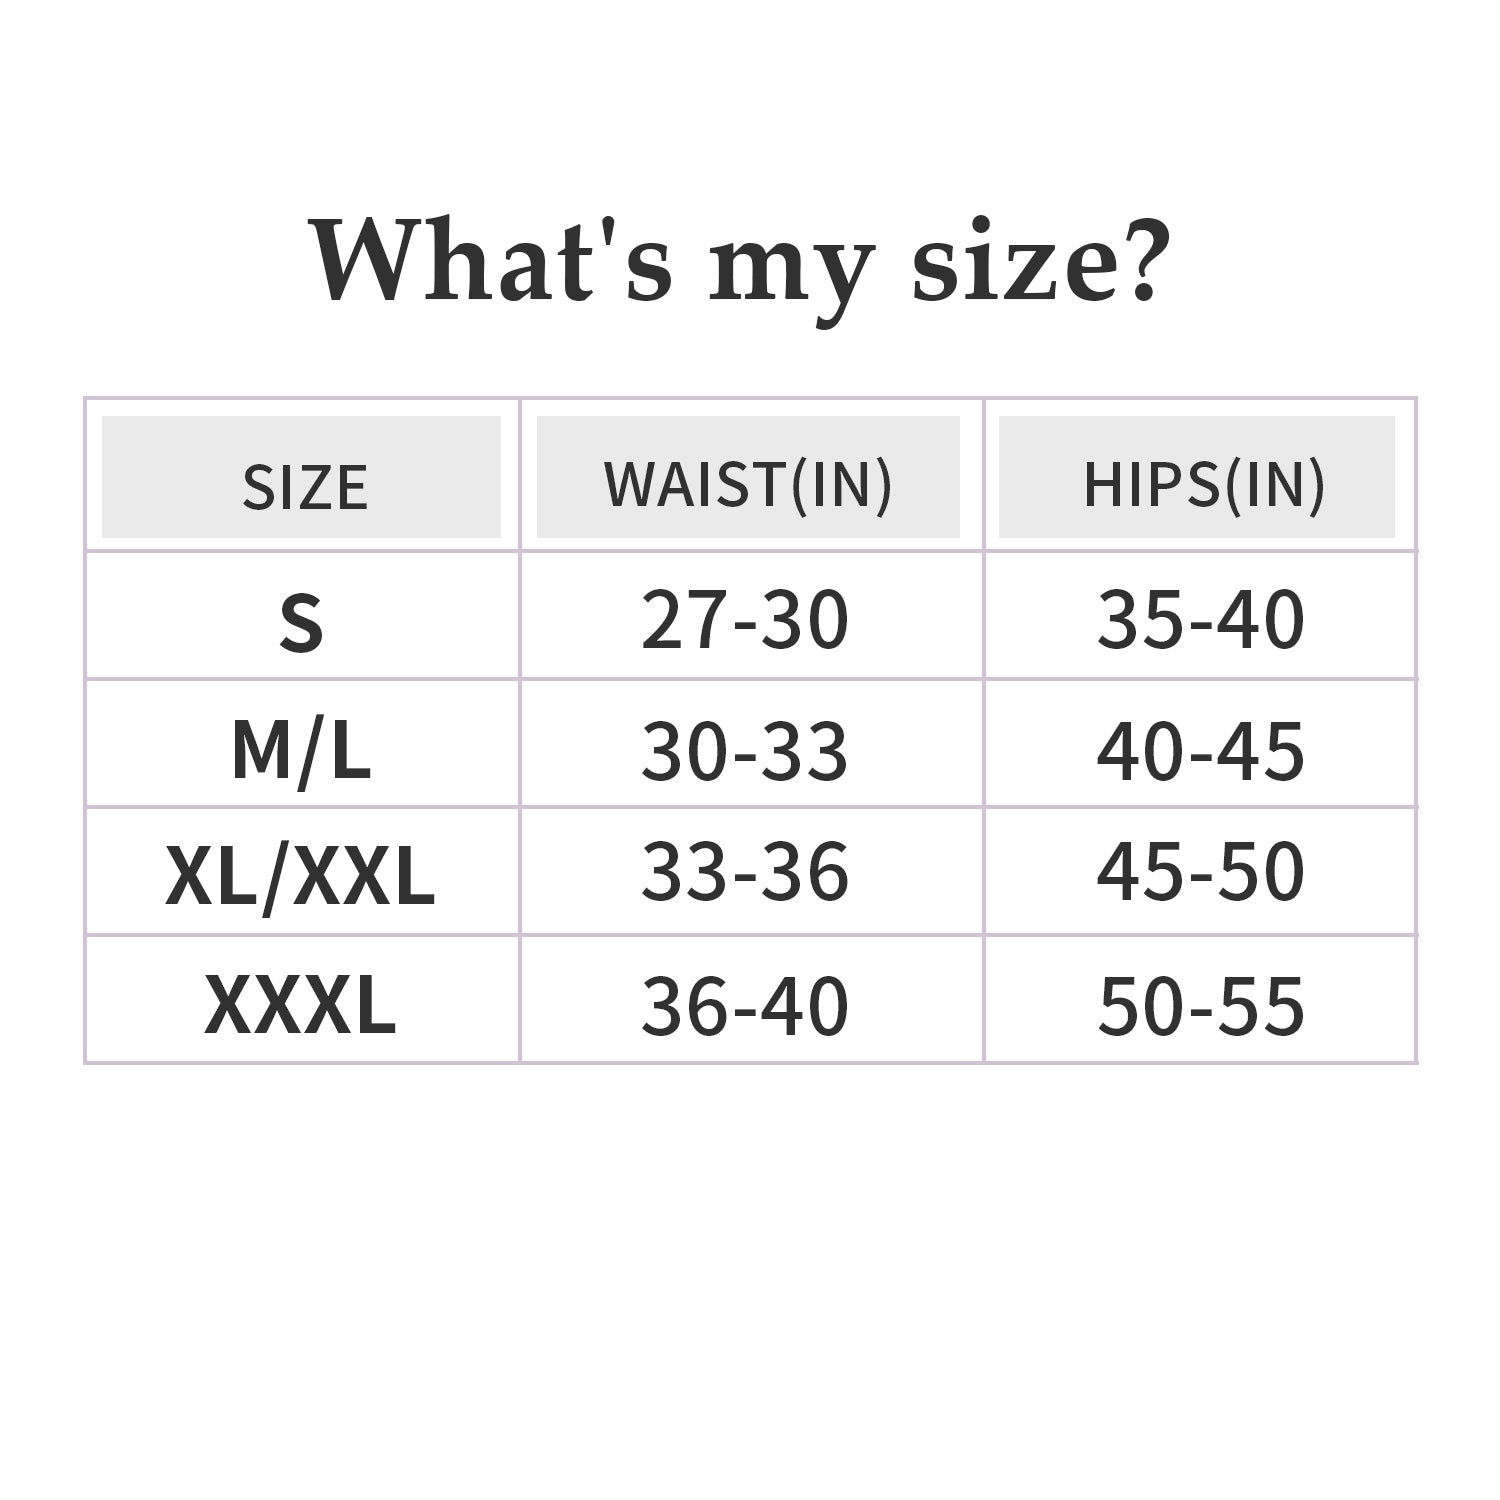 Plus Size High Waist Seamless Tummy Control Shaper Shorts